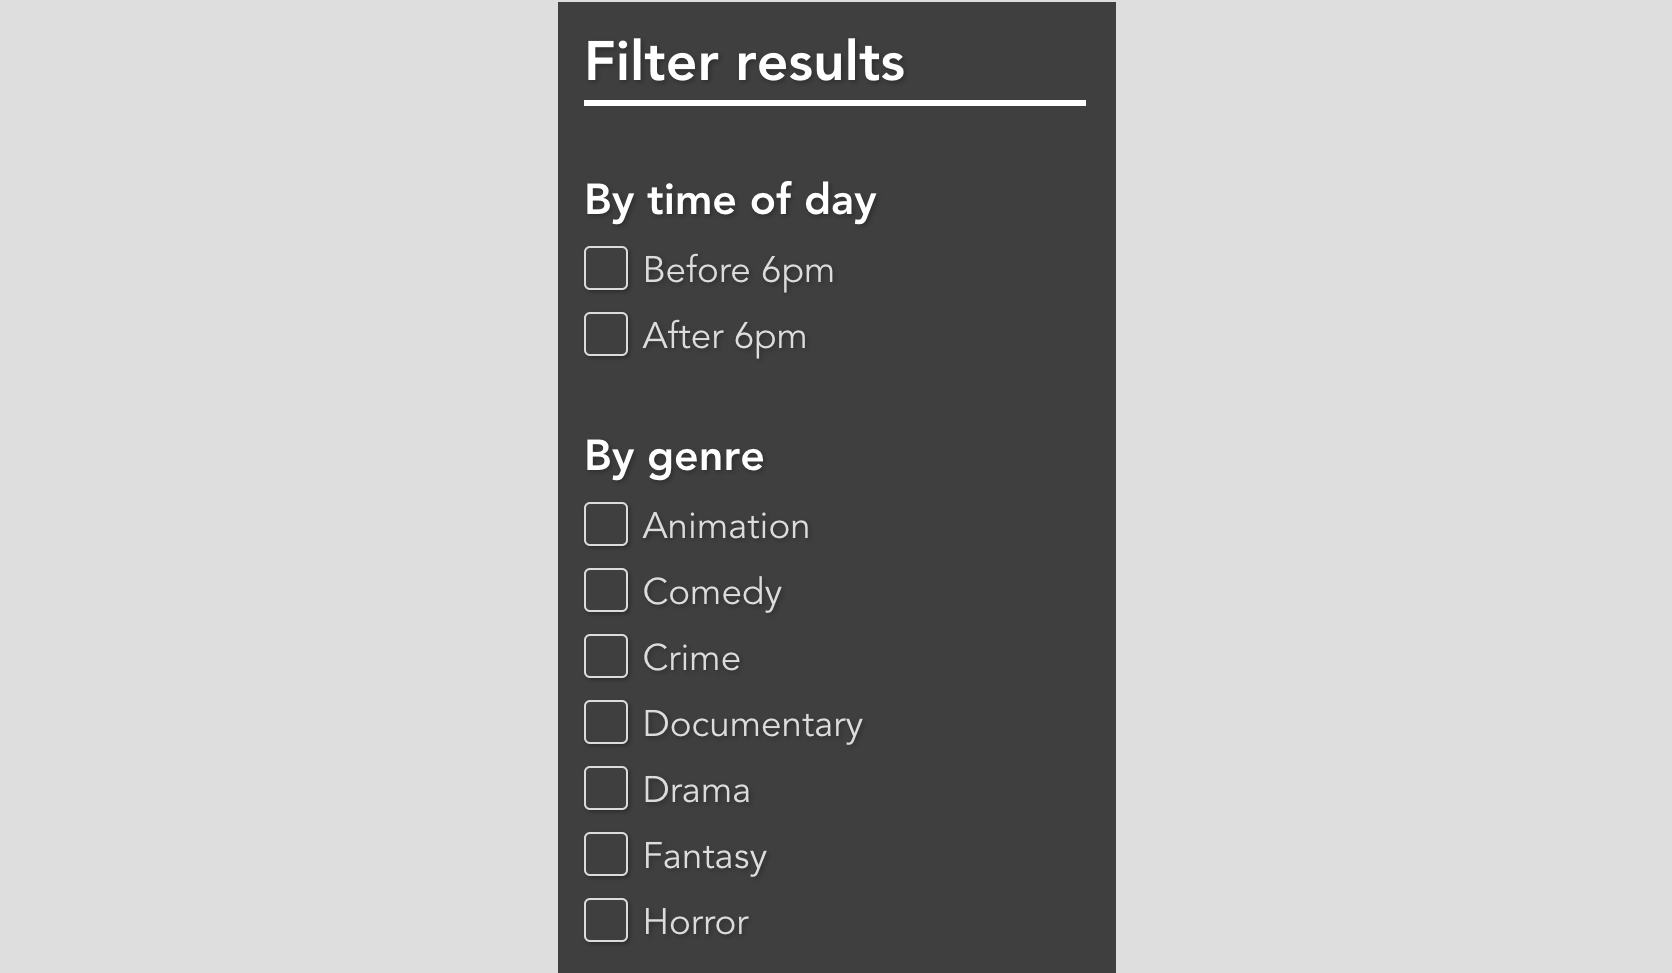 Filtering results